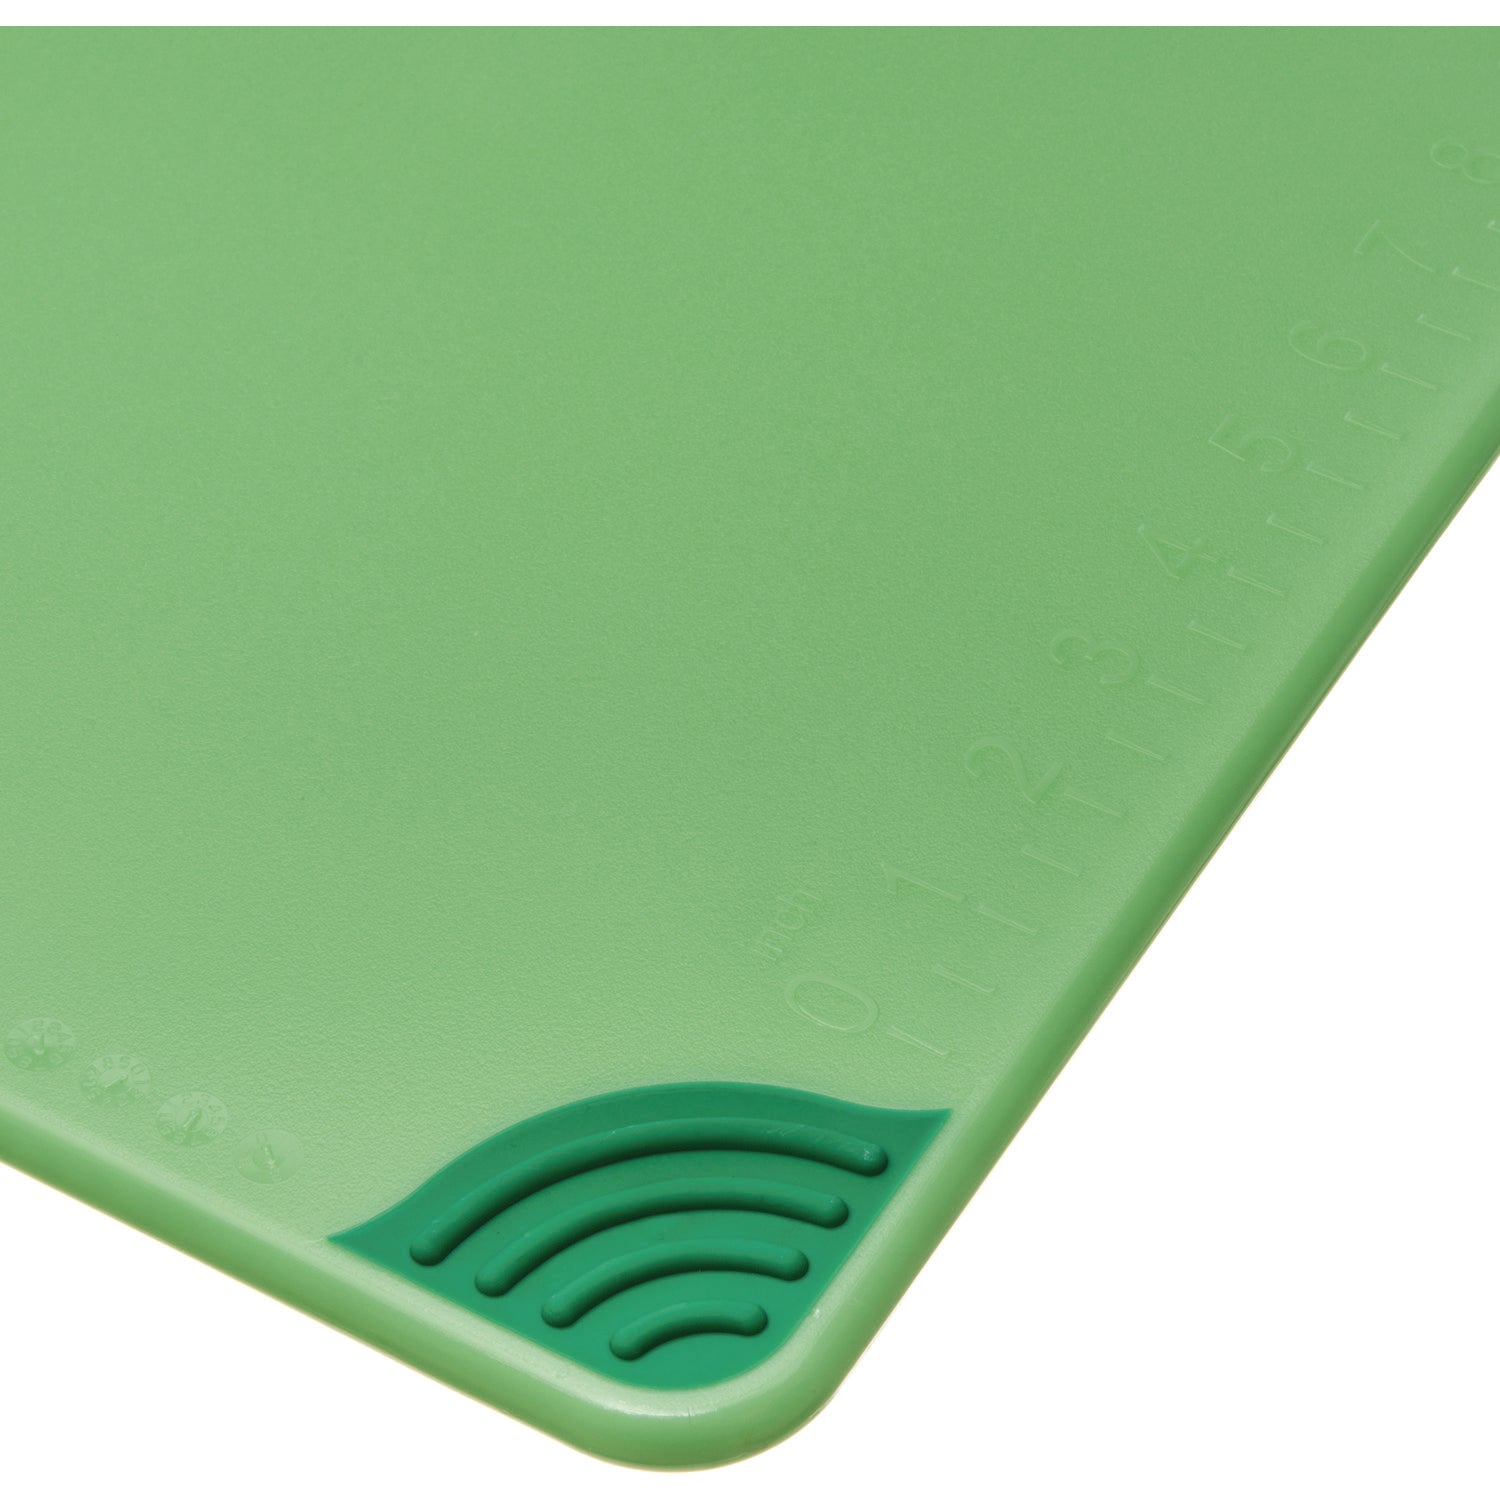 saf-t-grip-cutting-board-24-x-18-x-05-green_sjmcbg182412gn - 4